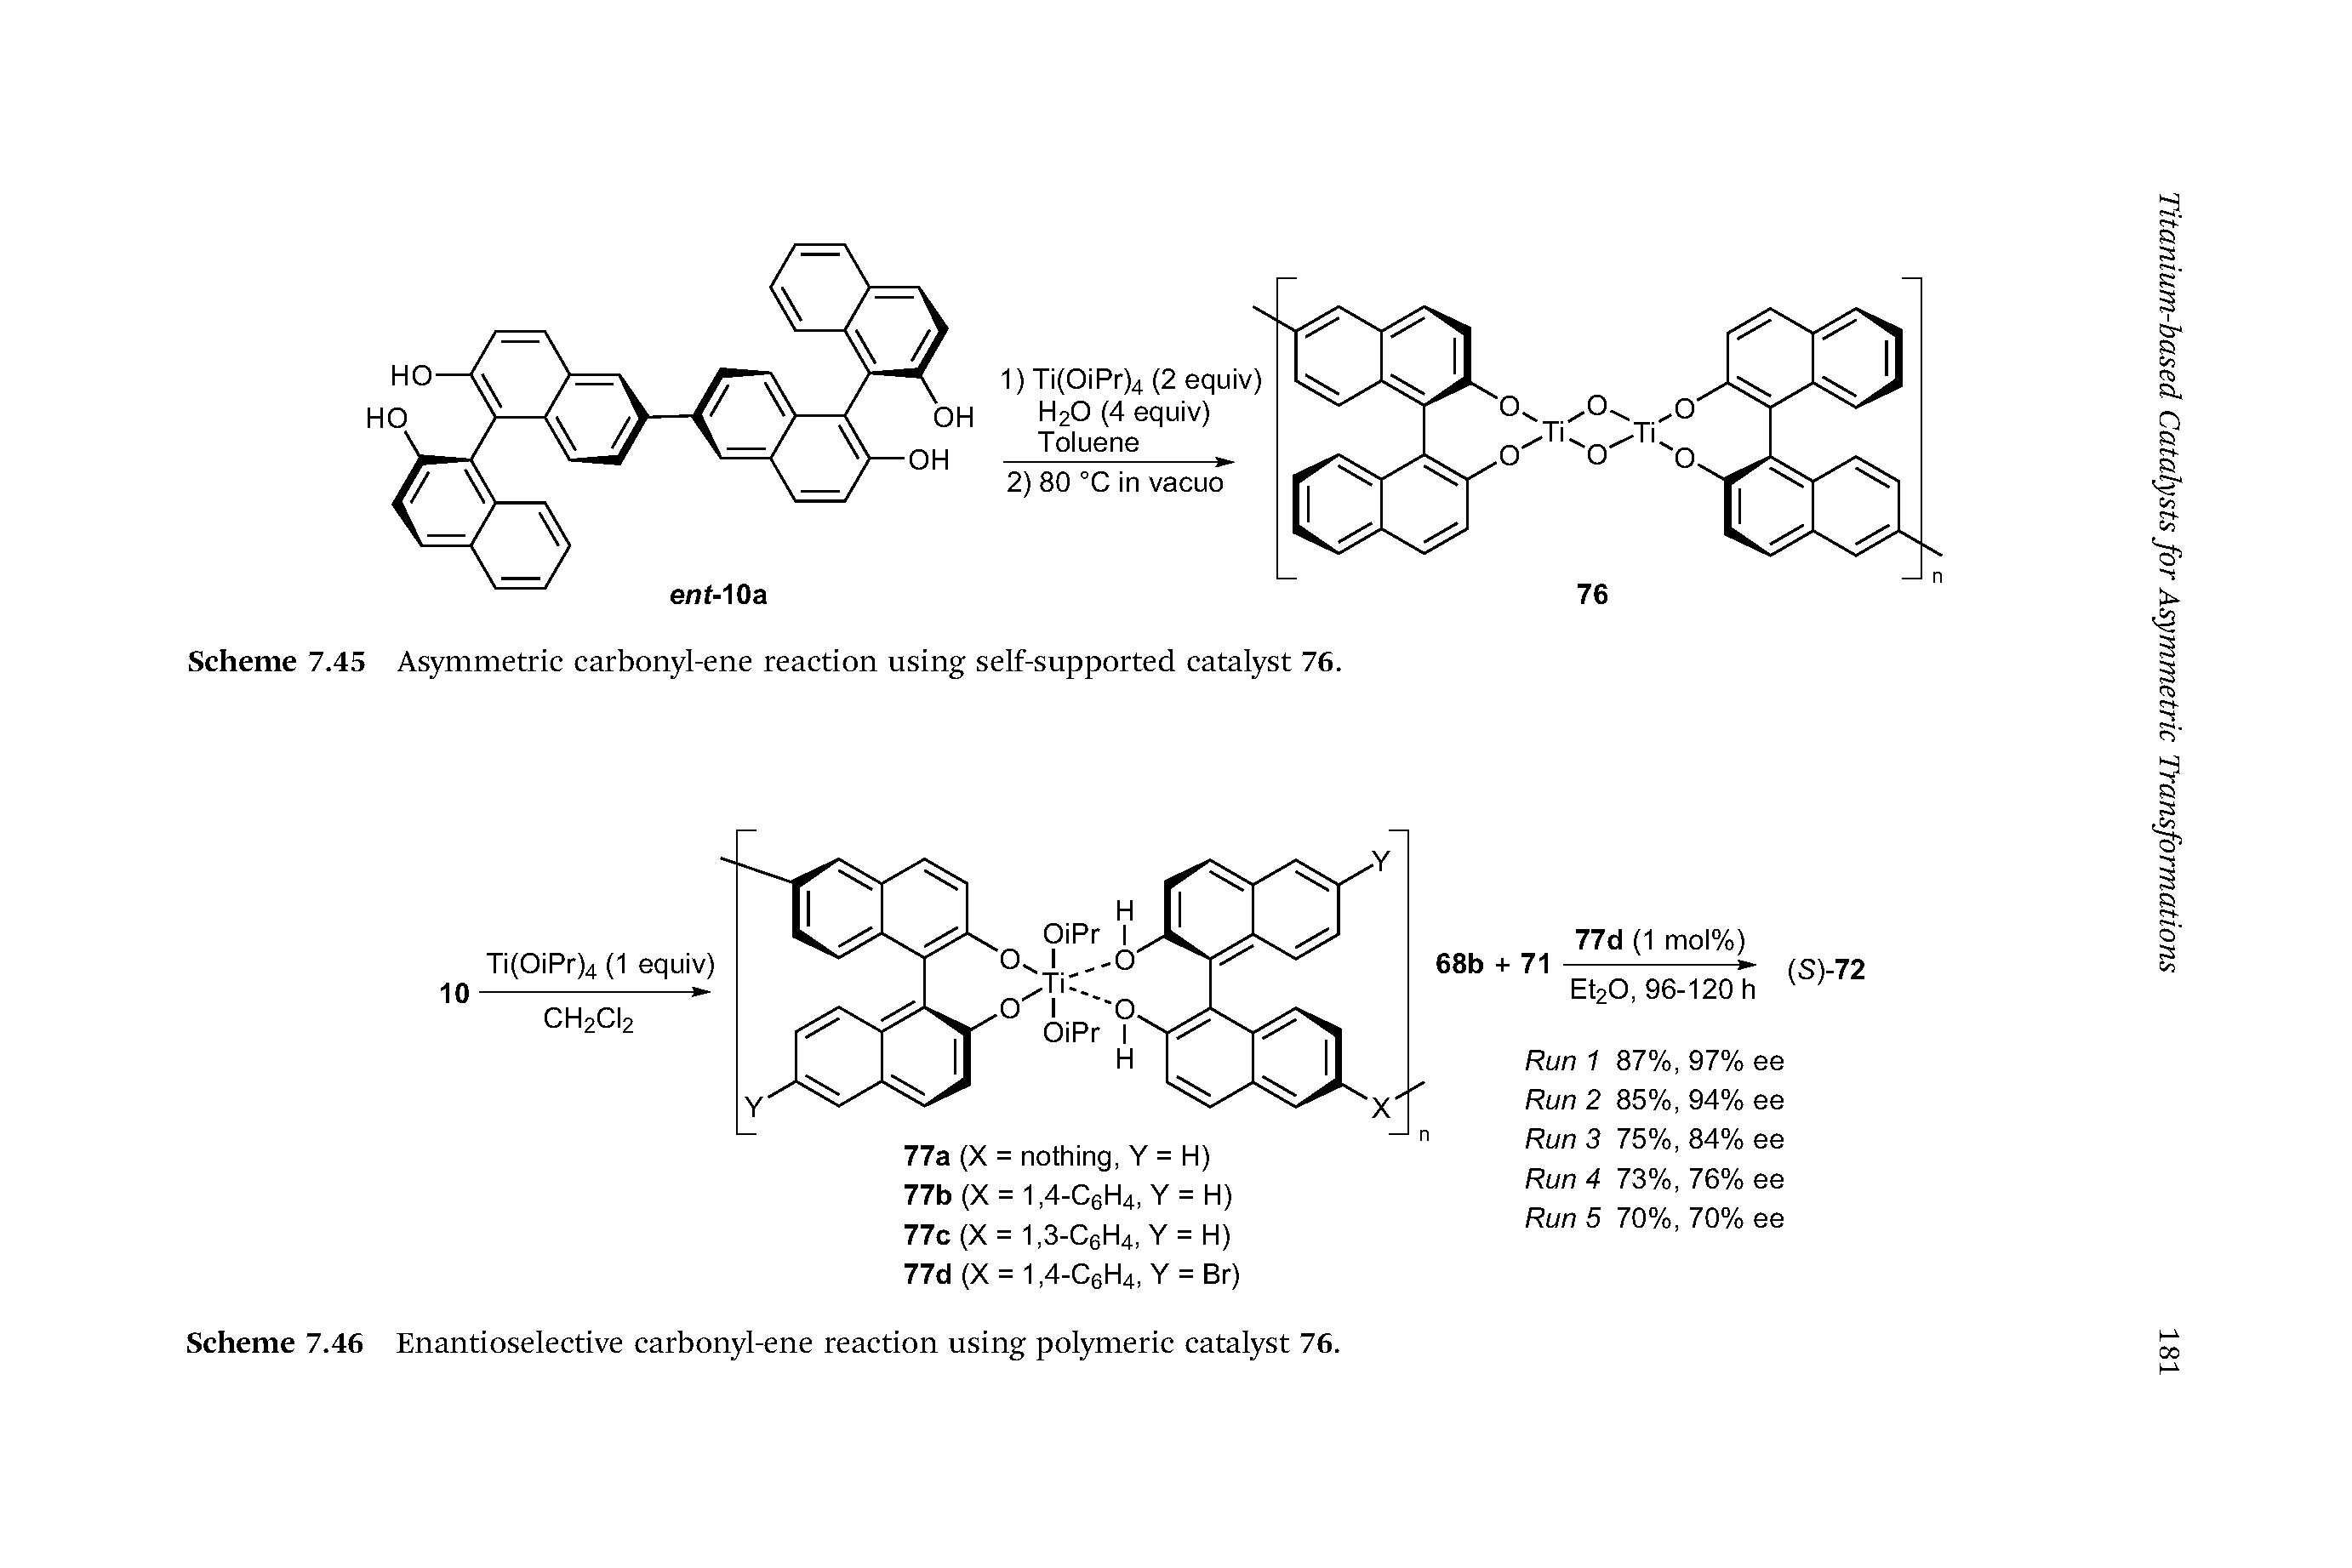 Scheme 7.46 Enantioselective carbonyl-ene reaction using polymeric catalyst 76.